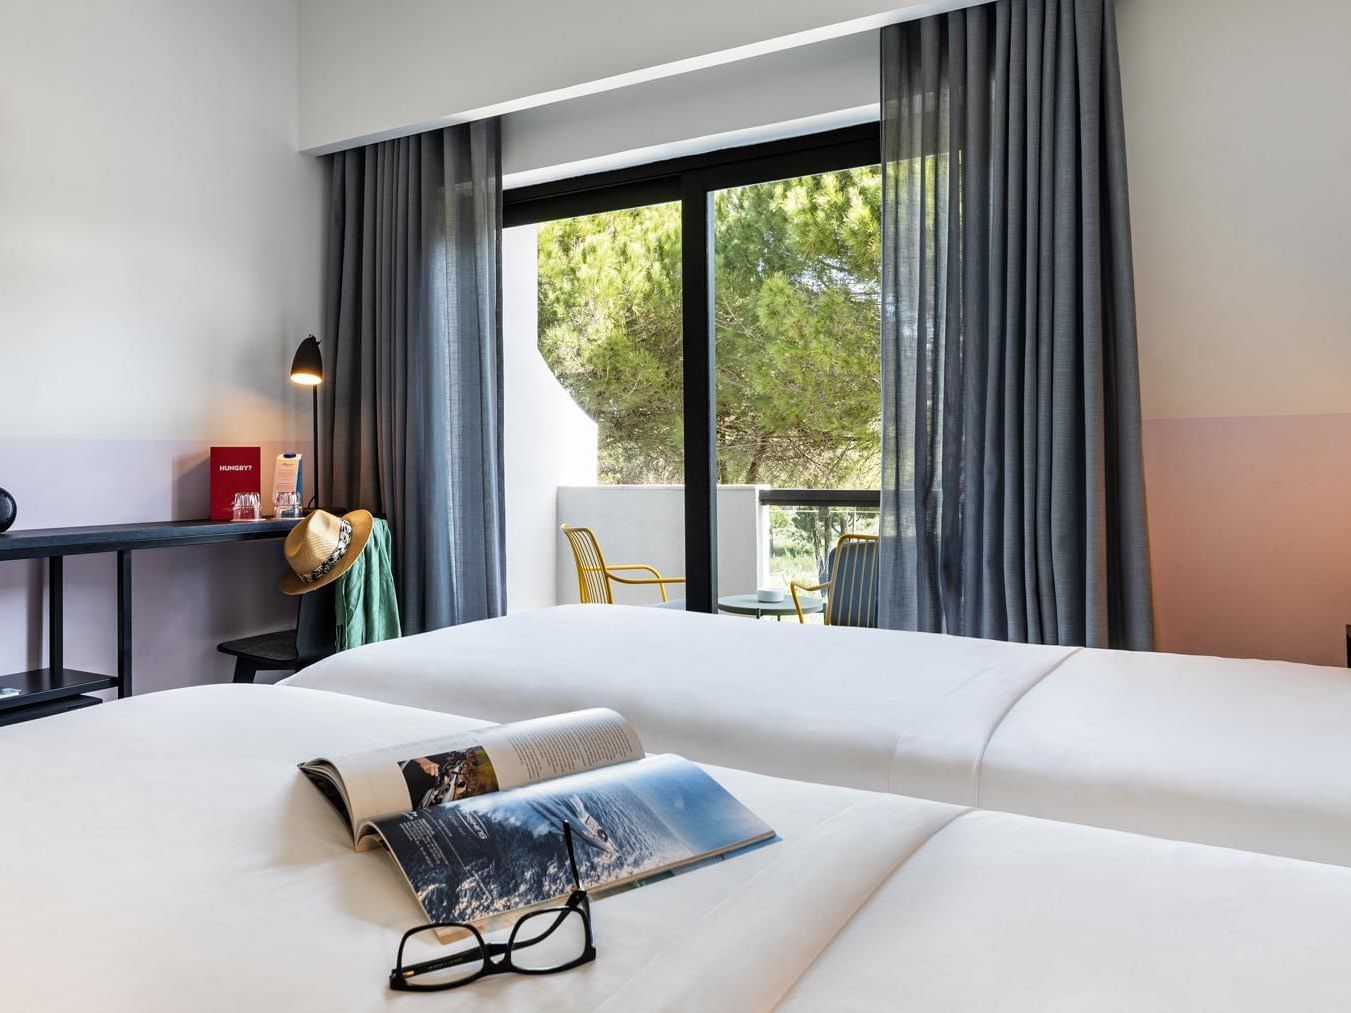 Standard Single or Twin Room at The Magnolia Hotel, Quinta do Lago, Algarve